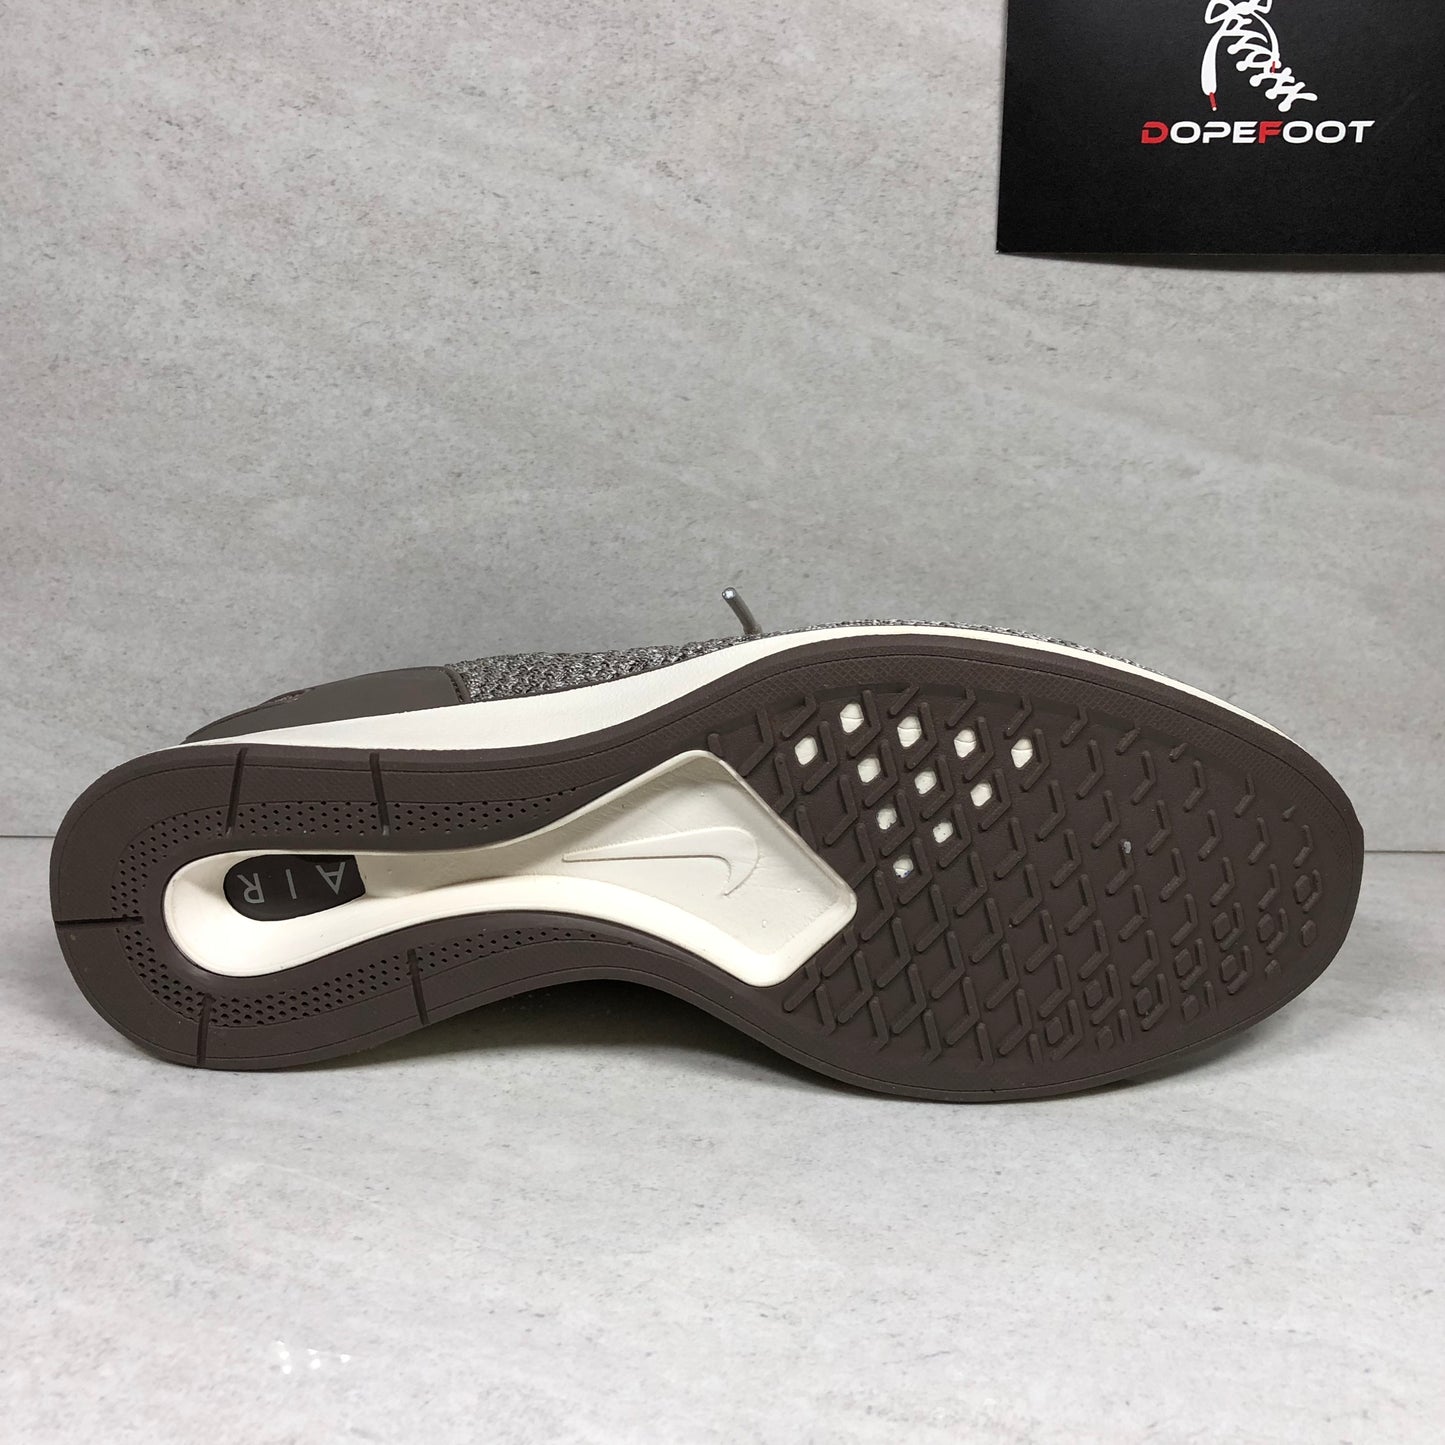 Nike Air Zoom Mariah Flyknit Racer String - 918264 200 - Men's Size 10/Size 11.5